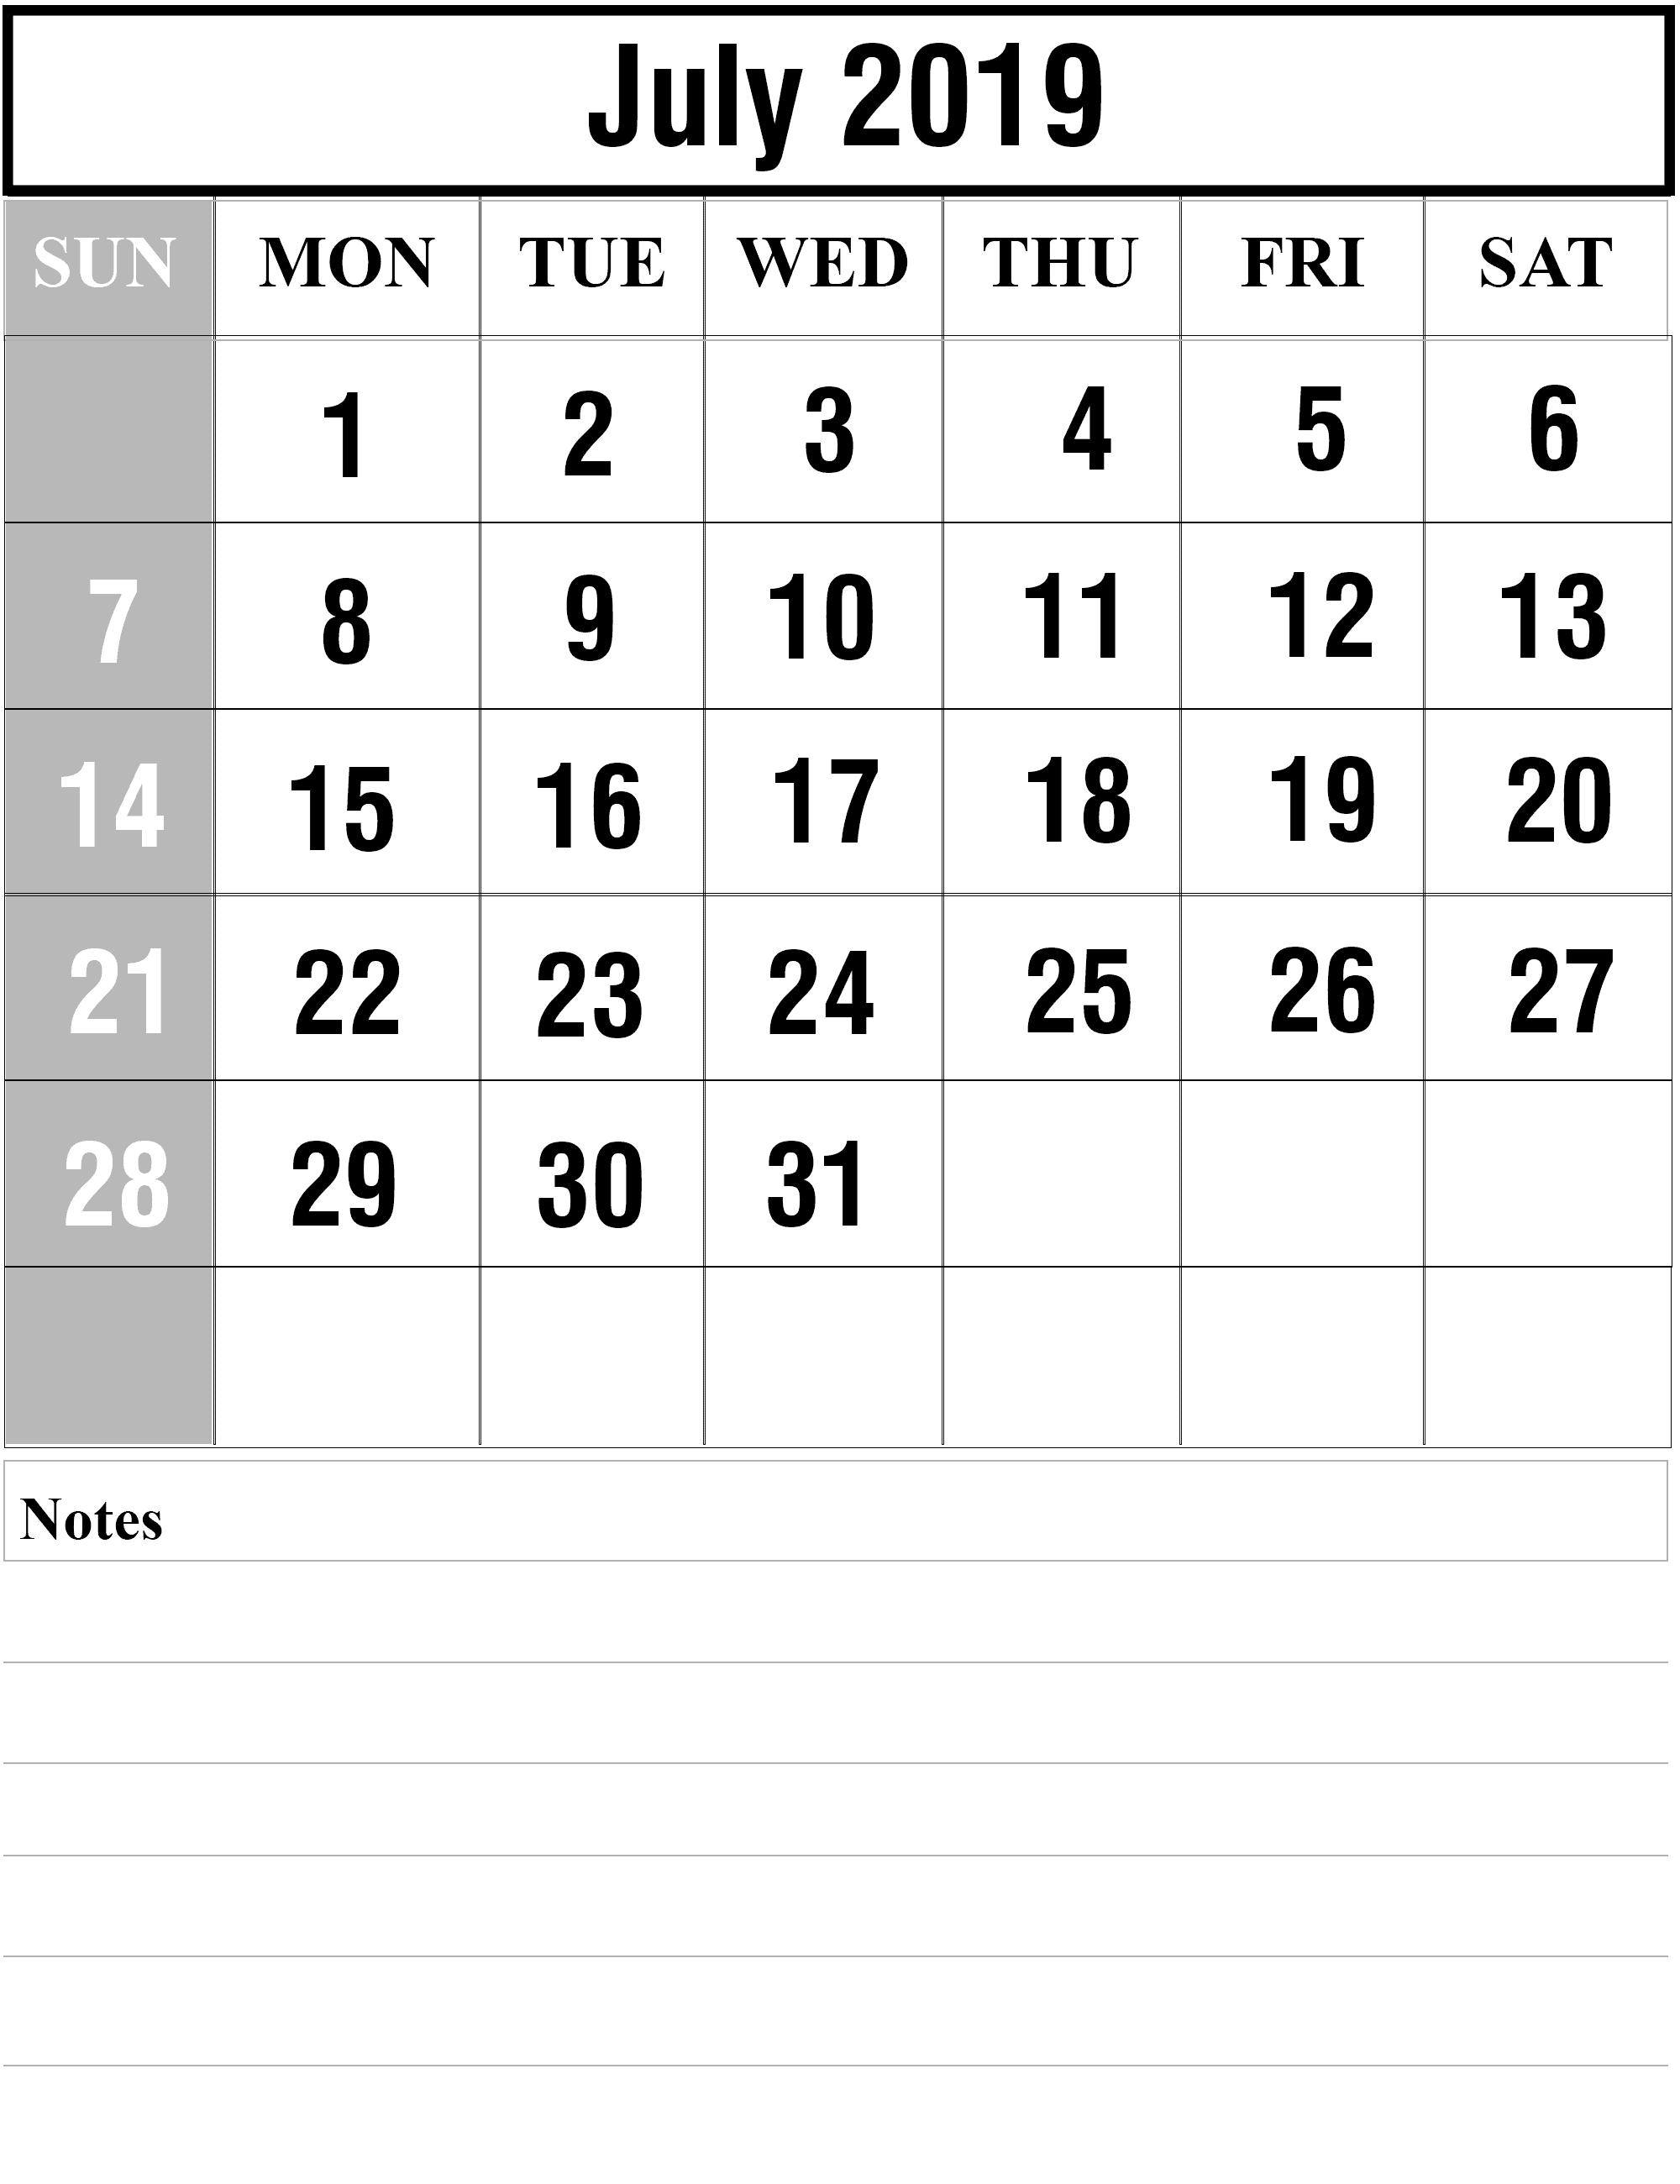 July 2020 Printable Calendar 